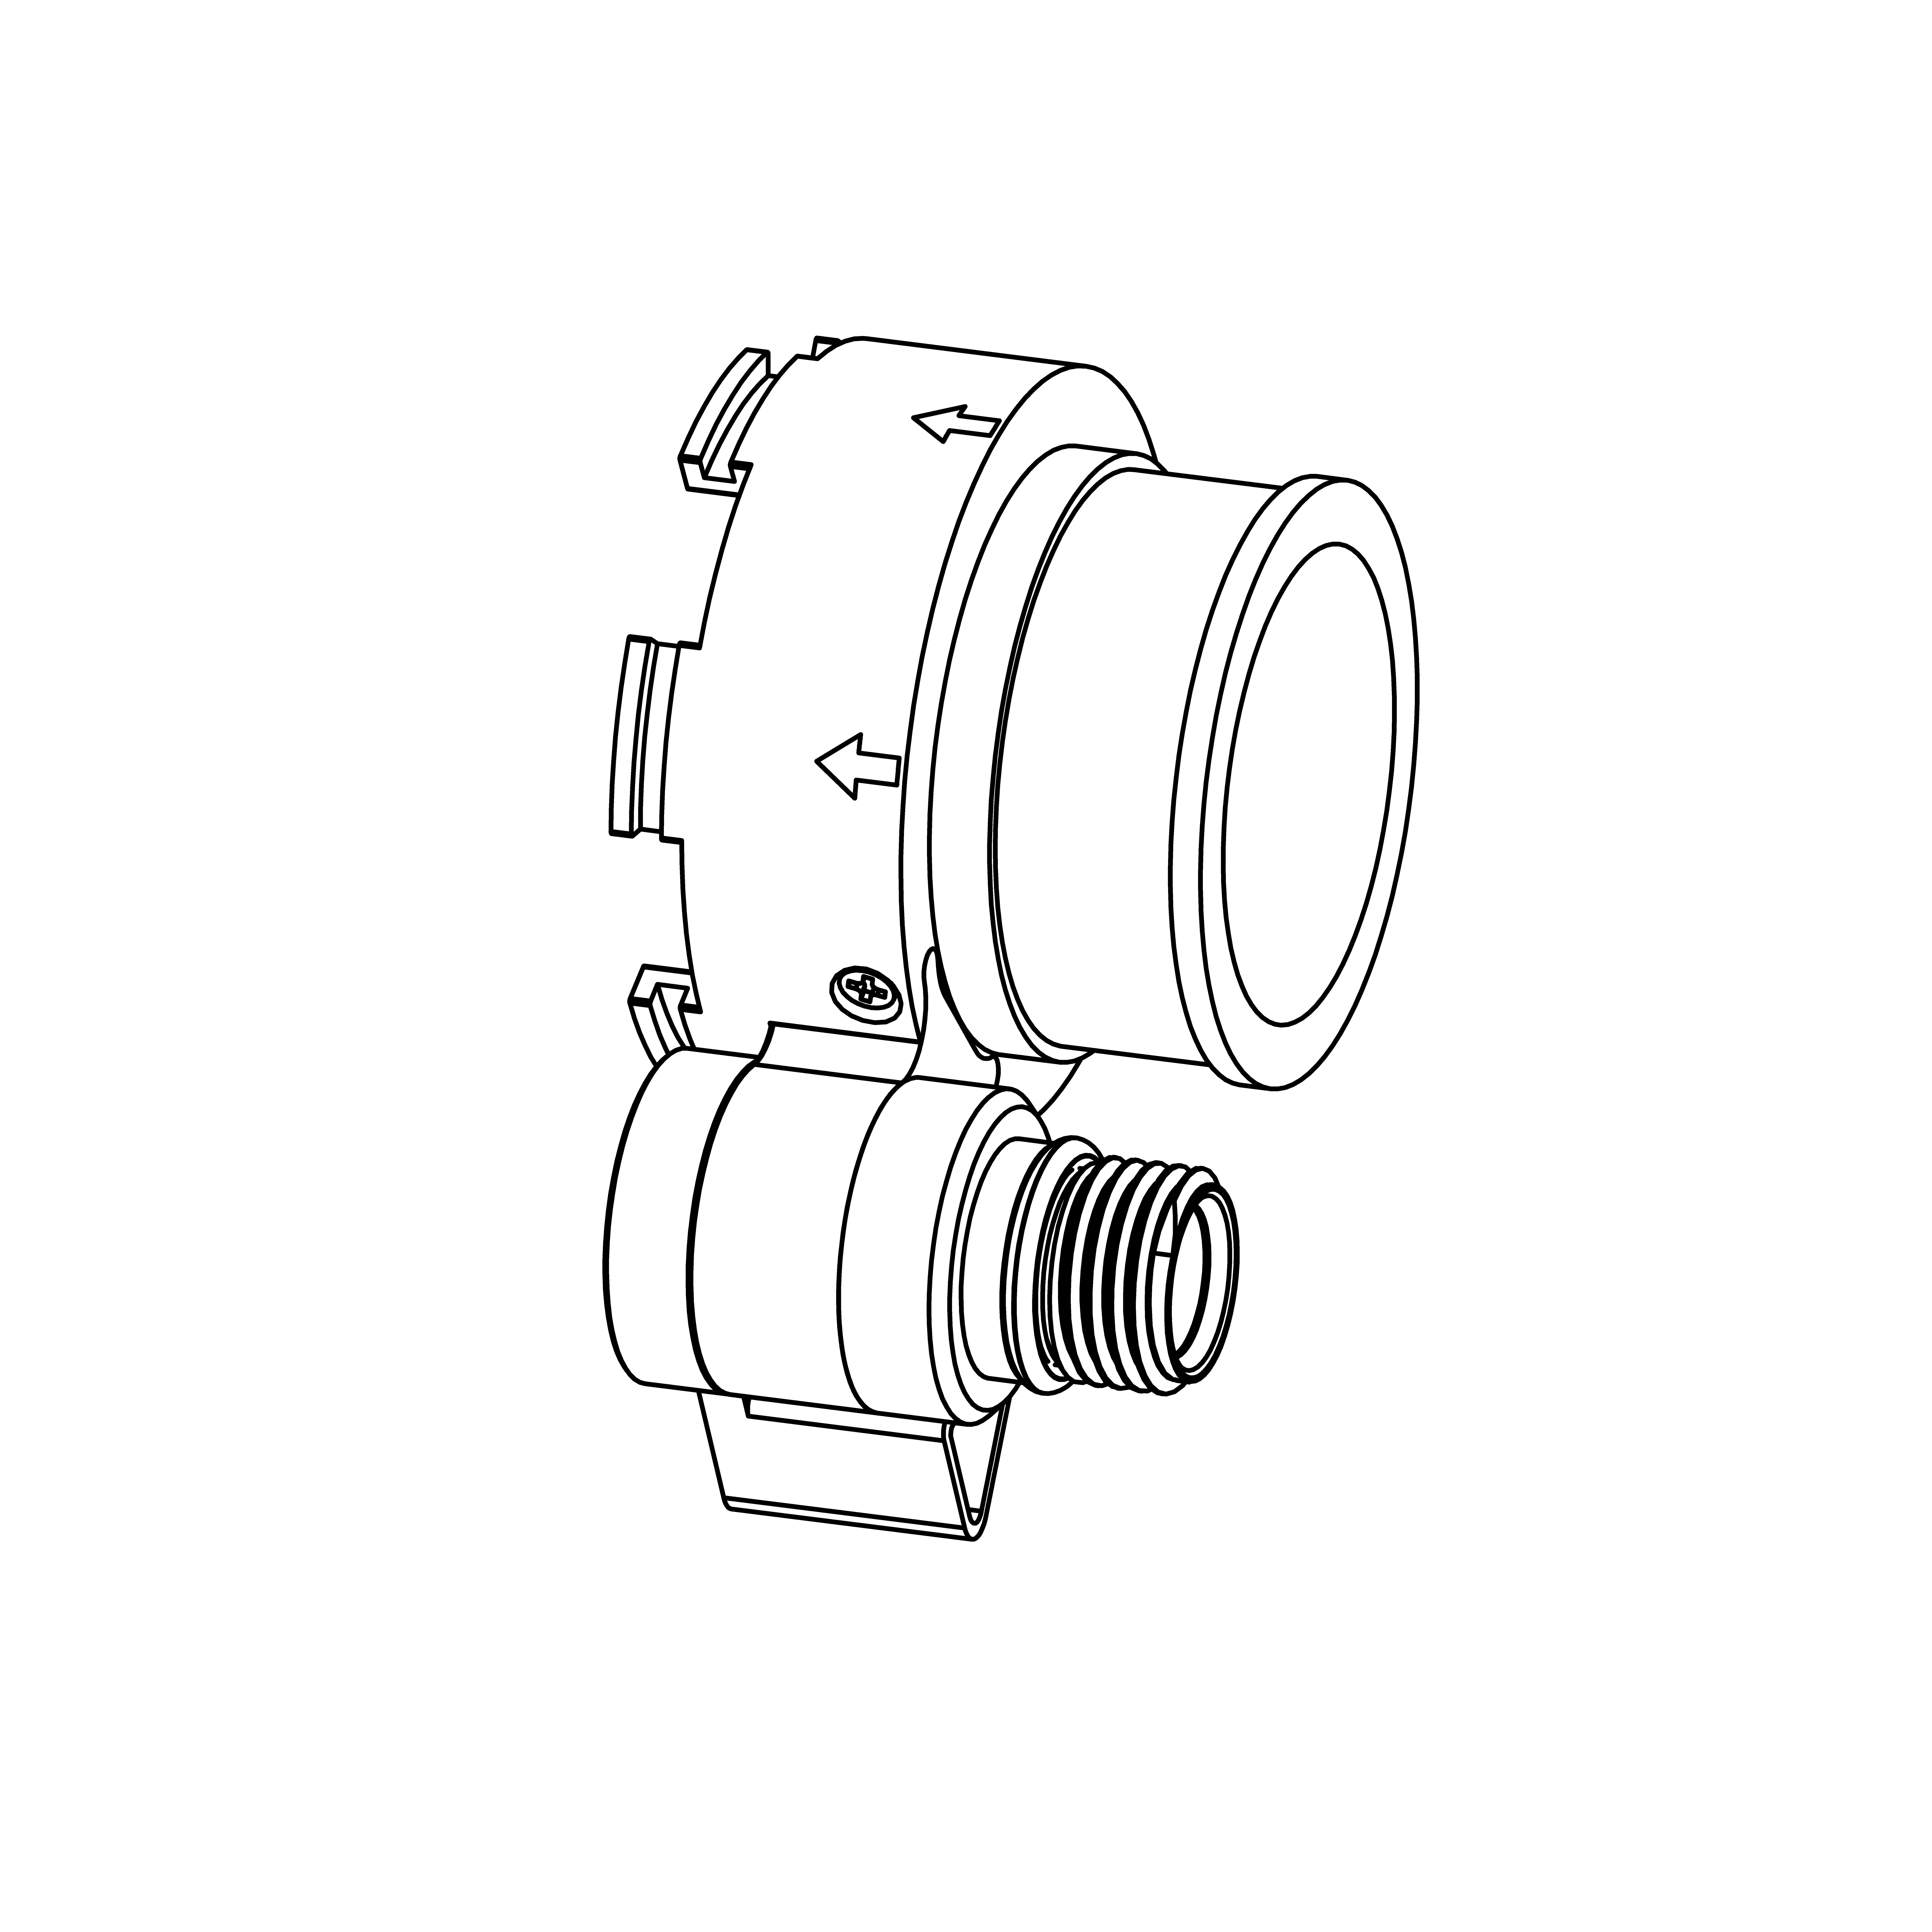 SM manual add valve (MAV) — left, inhale, diluent (38.1 (1 1/2")